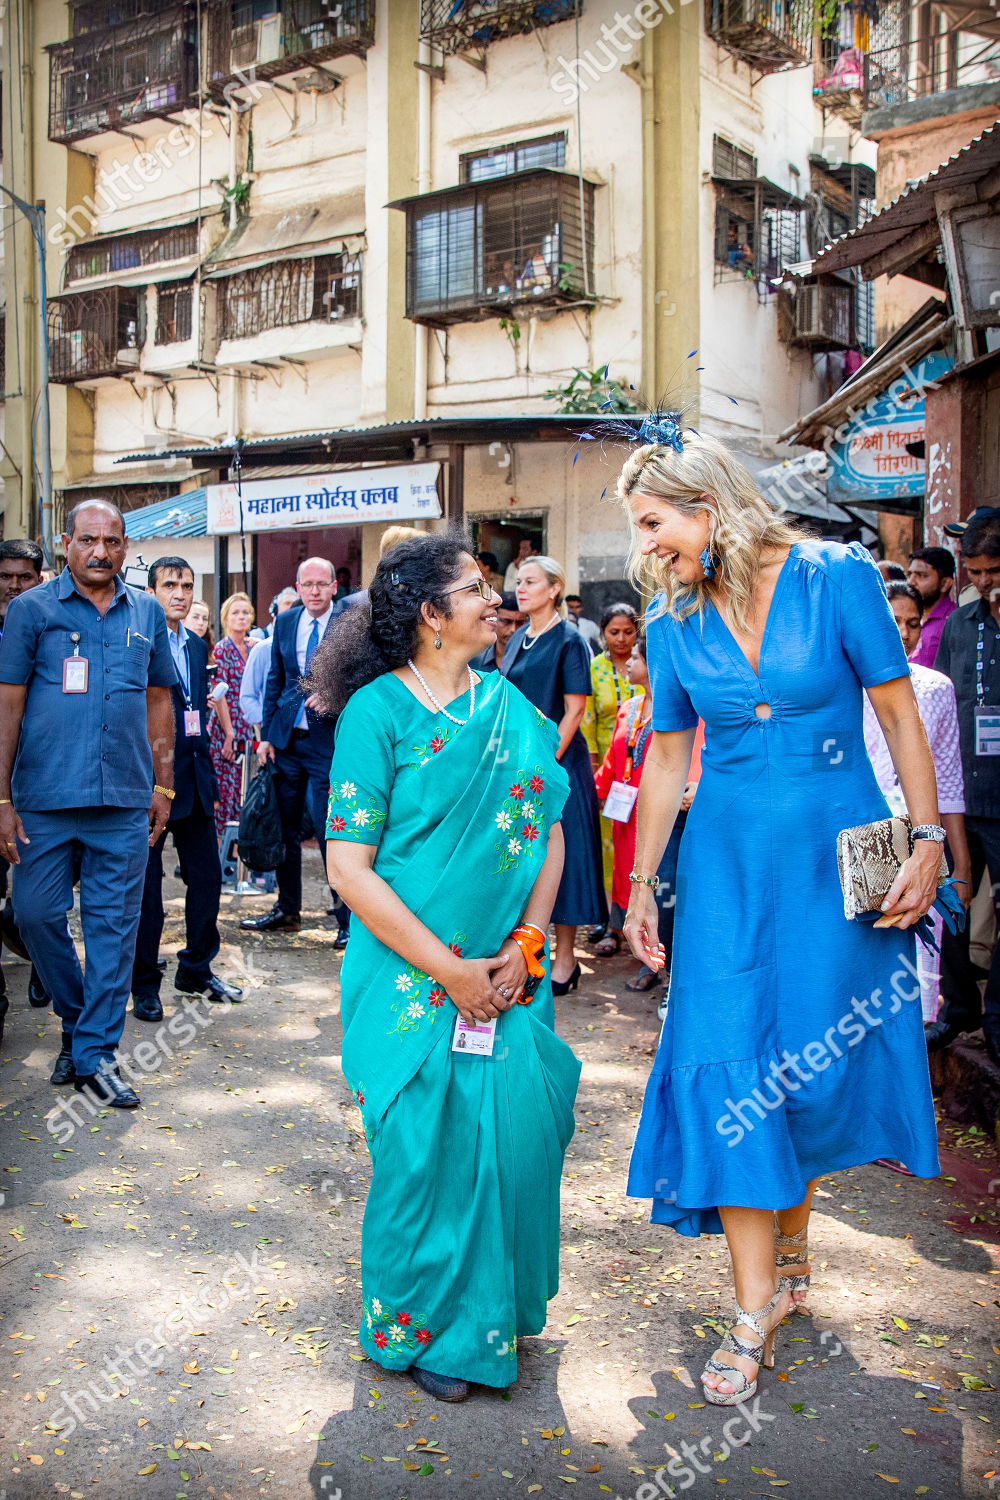 dutch-royals-state-visit-to-india-shutterstock-editorial-10445564k.jpg